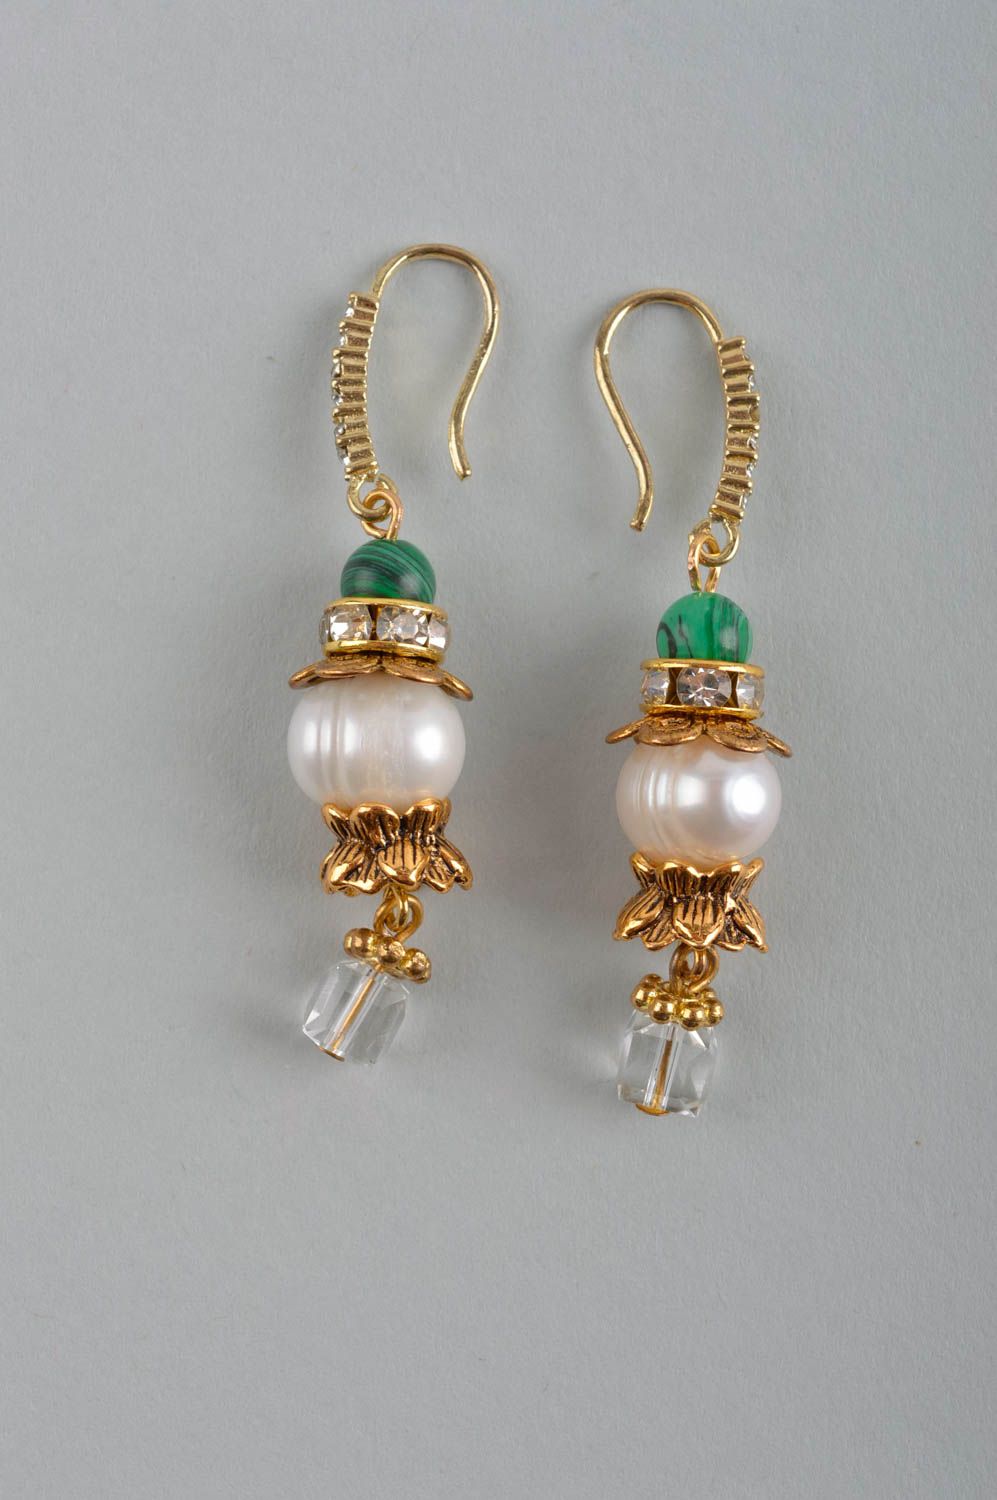 Fashion jewelry handmade earrings homemade jewelry cute earrings for girls photo 3